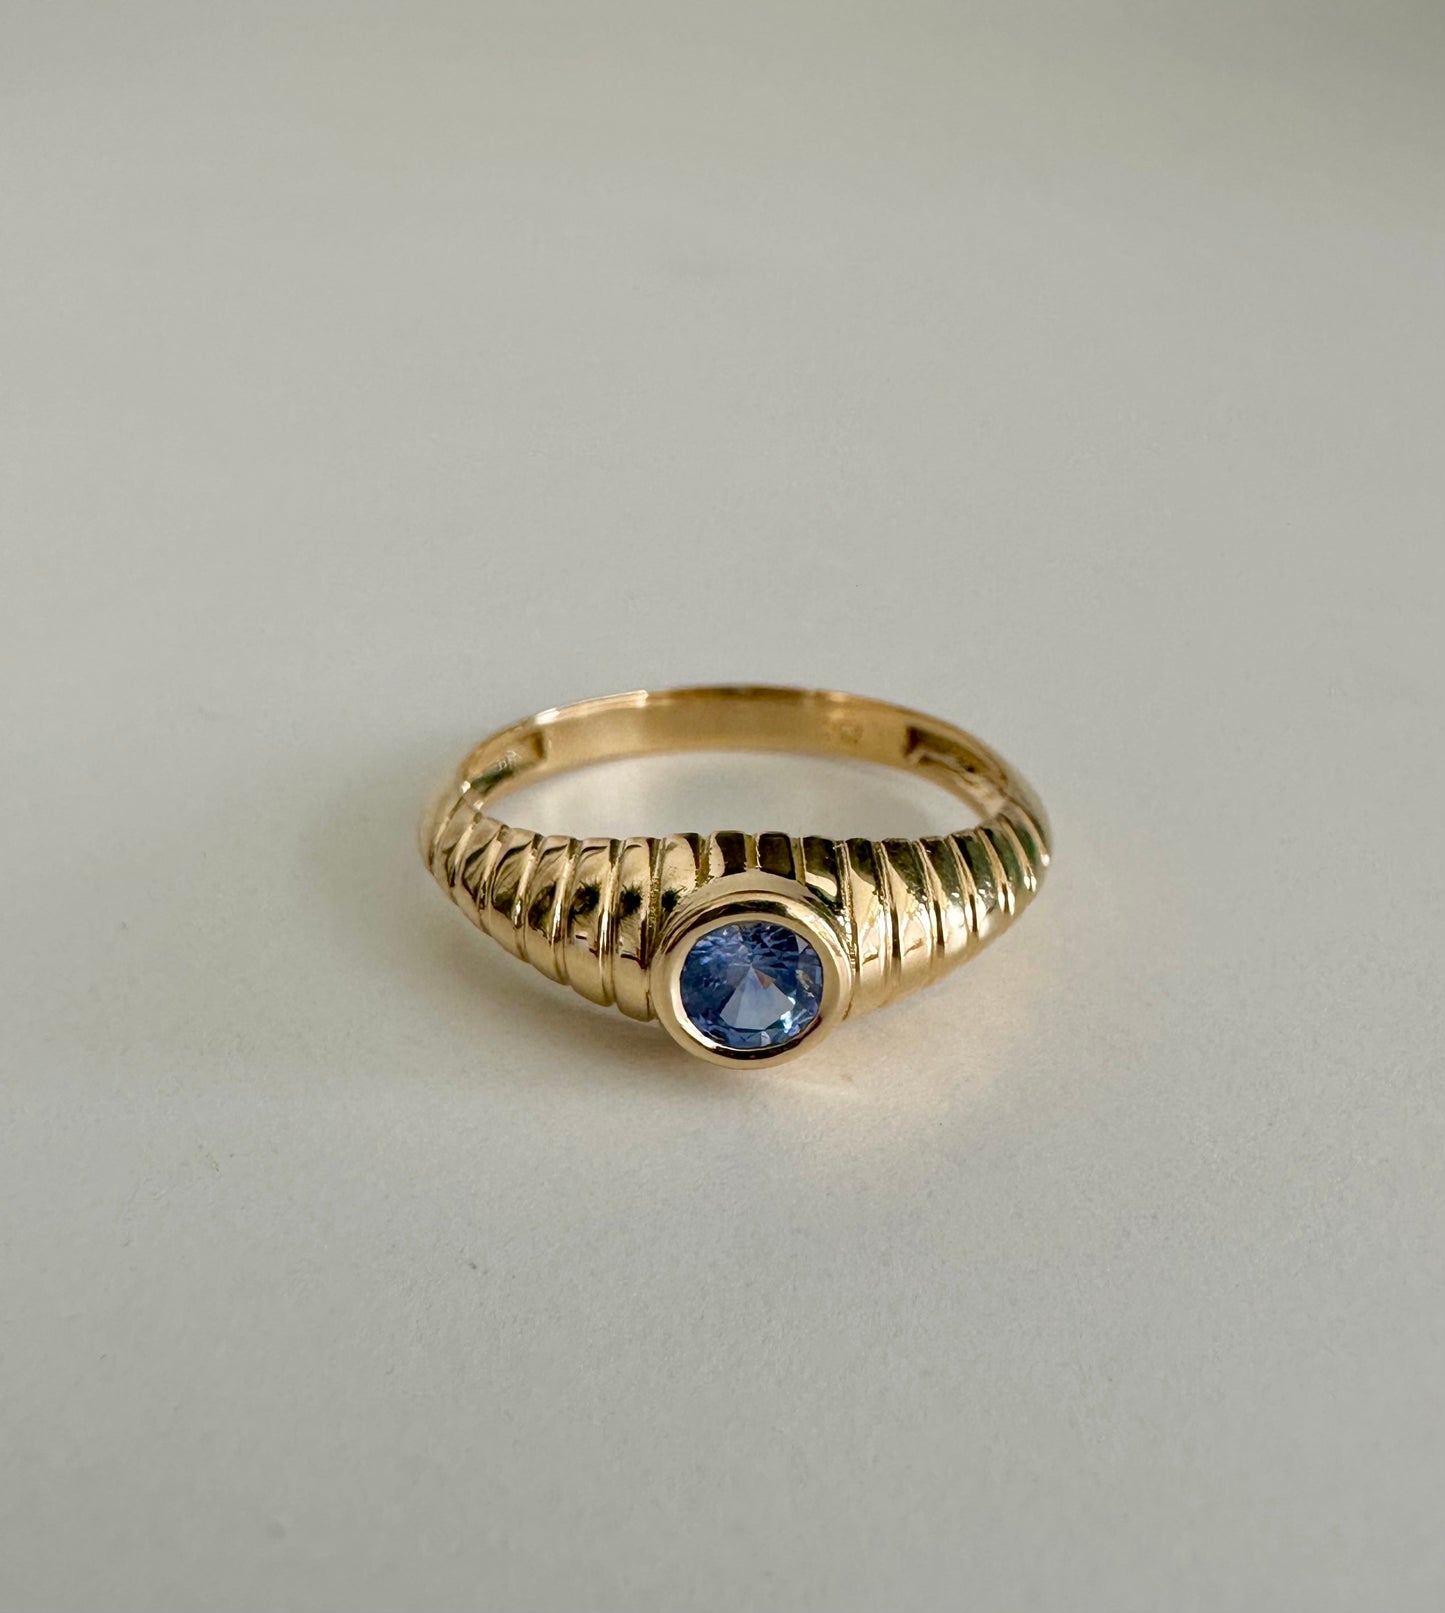 Mina Sapphire 18k gold ring - 4.3mm centre stone